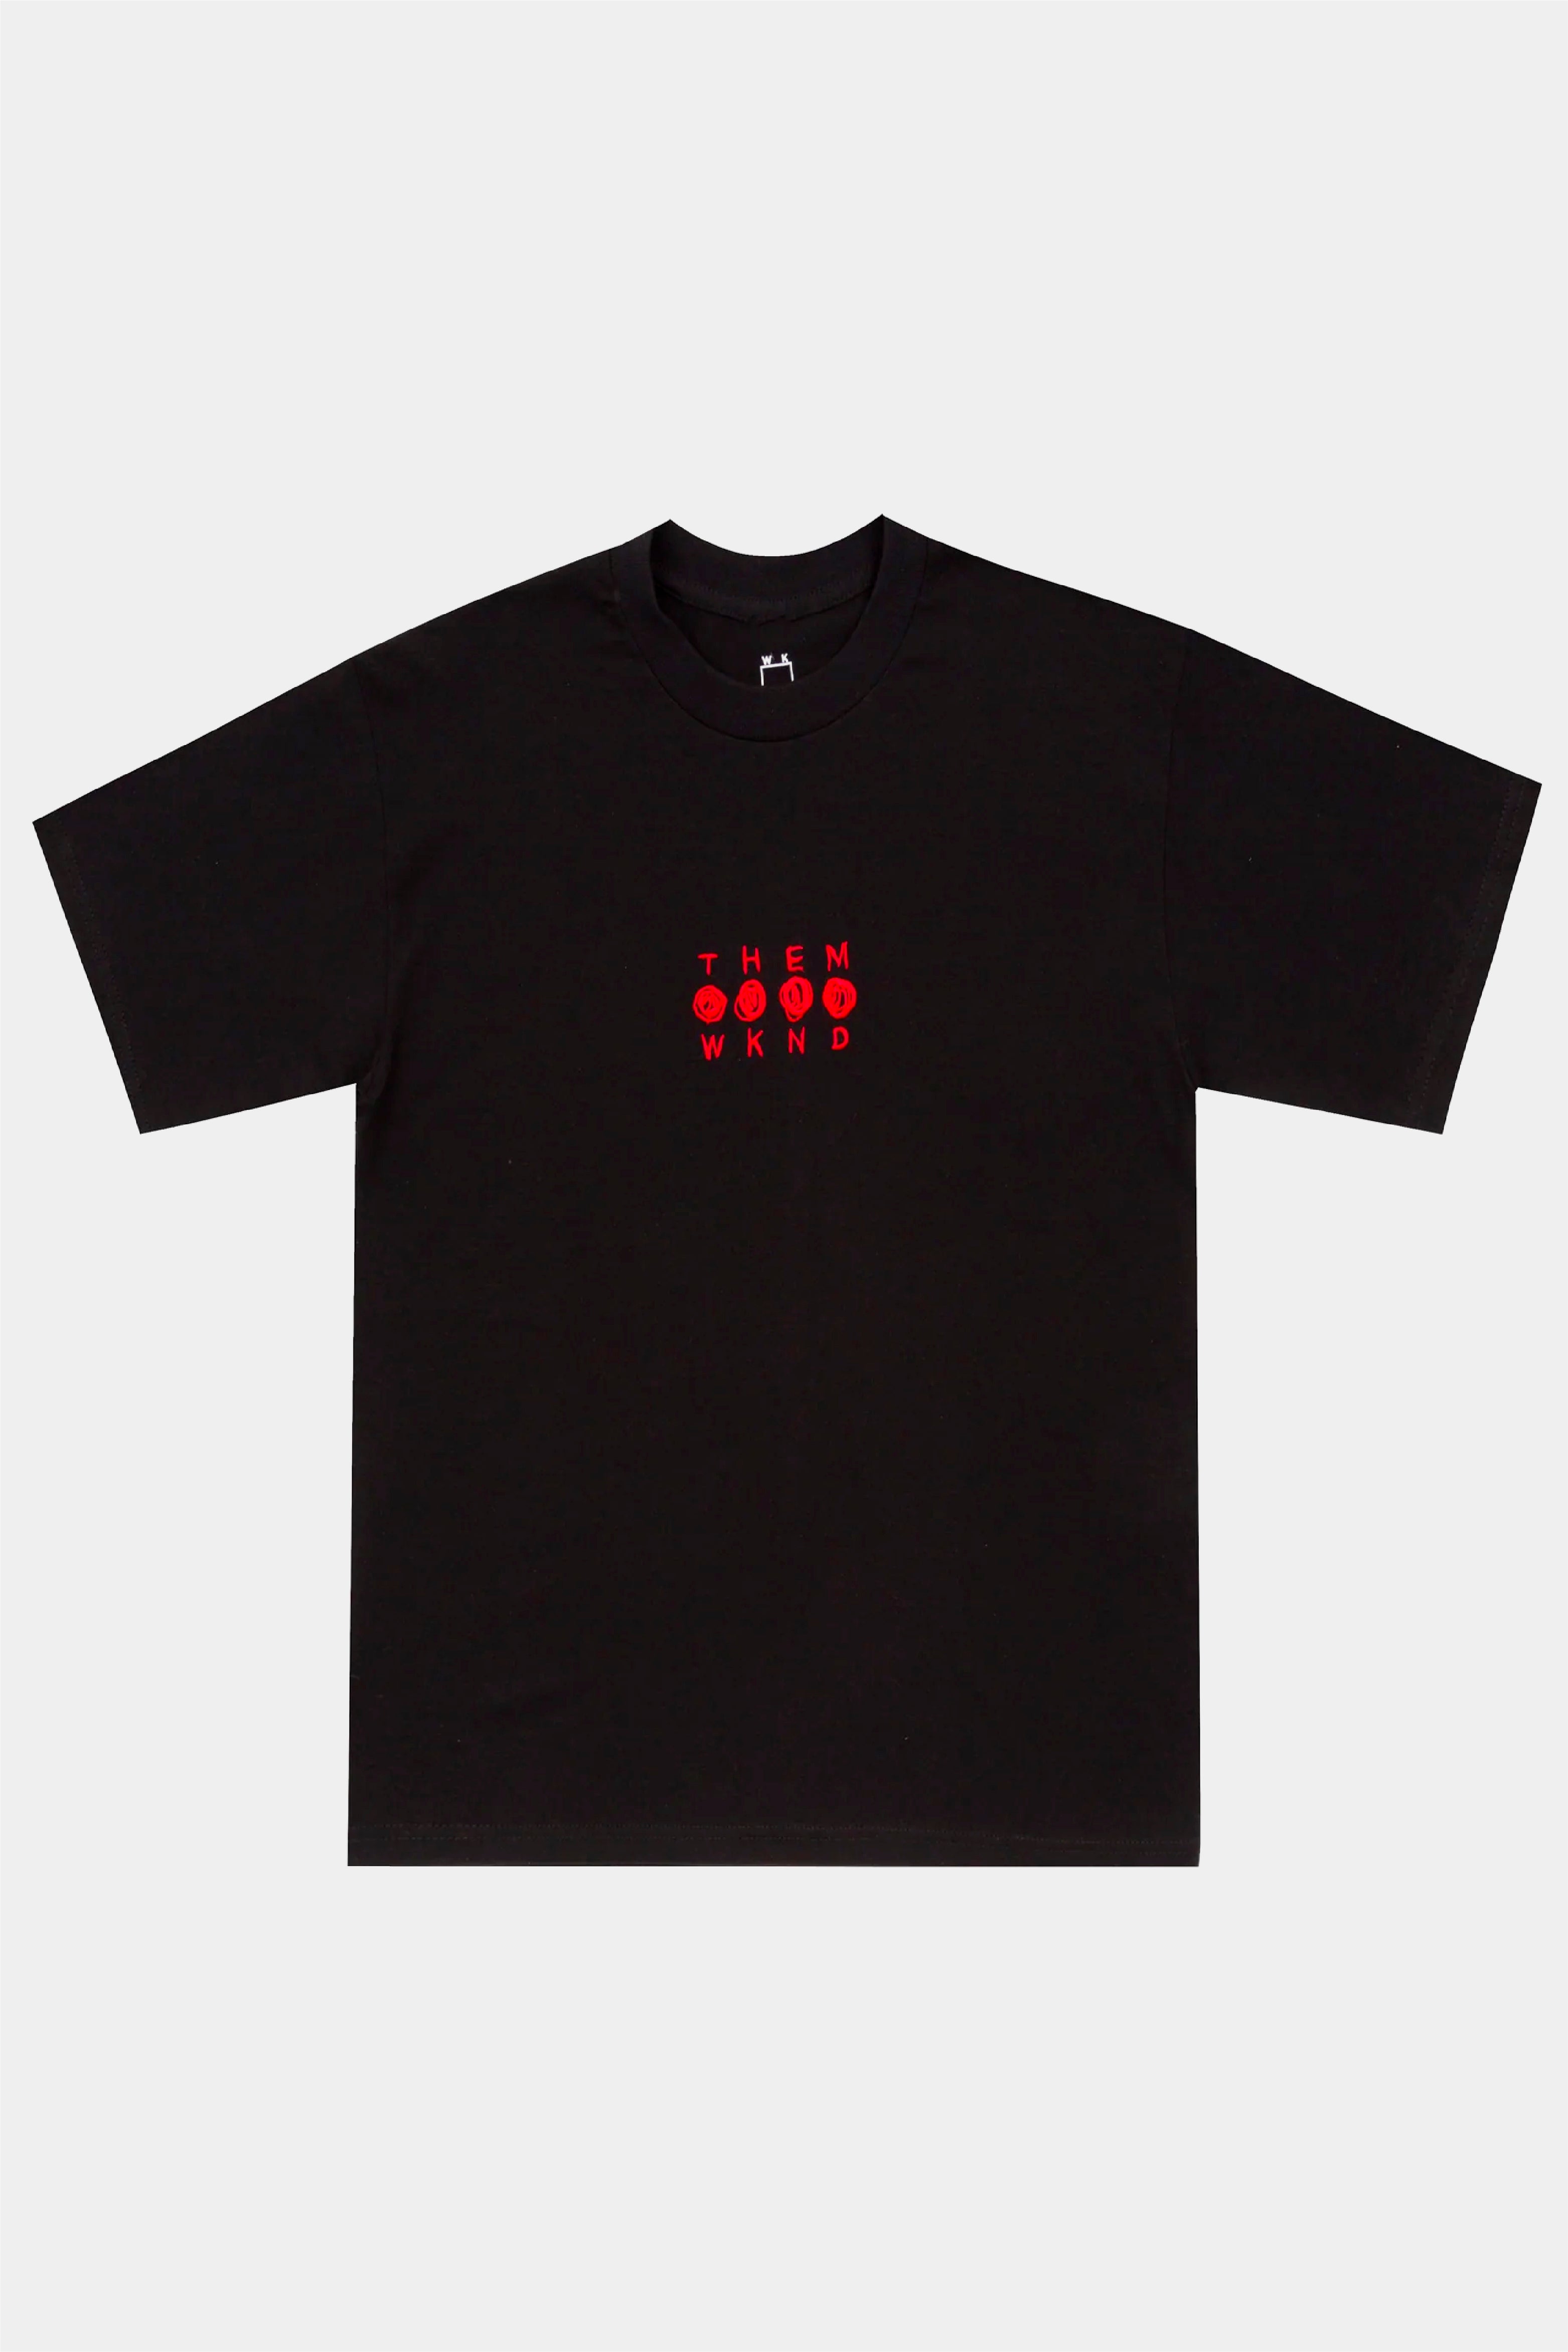 Selectshop FRAME - WKND WKND X Them Logo Tee T-Shirts Concept Store Dubai